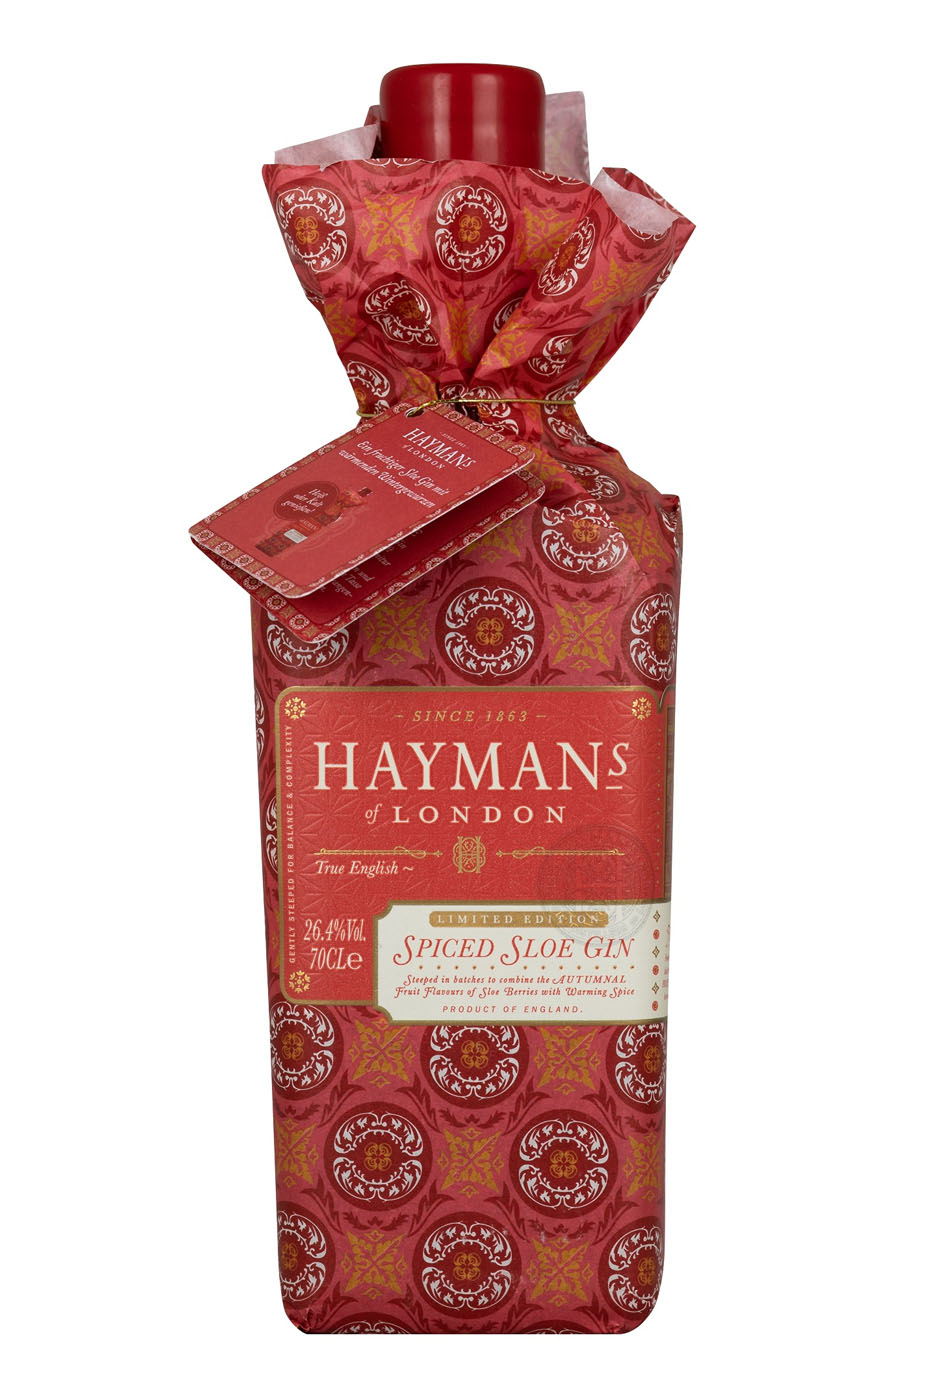 Hayman's Spiced Sloe Gin 26,4%